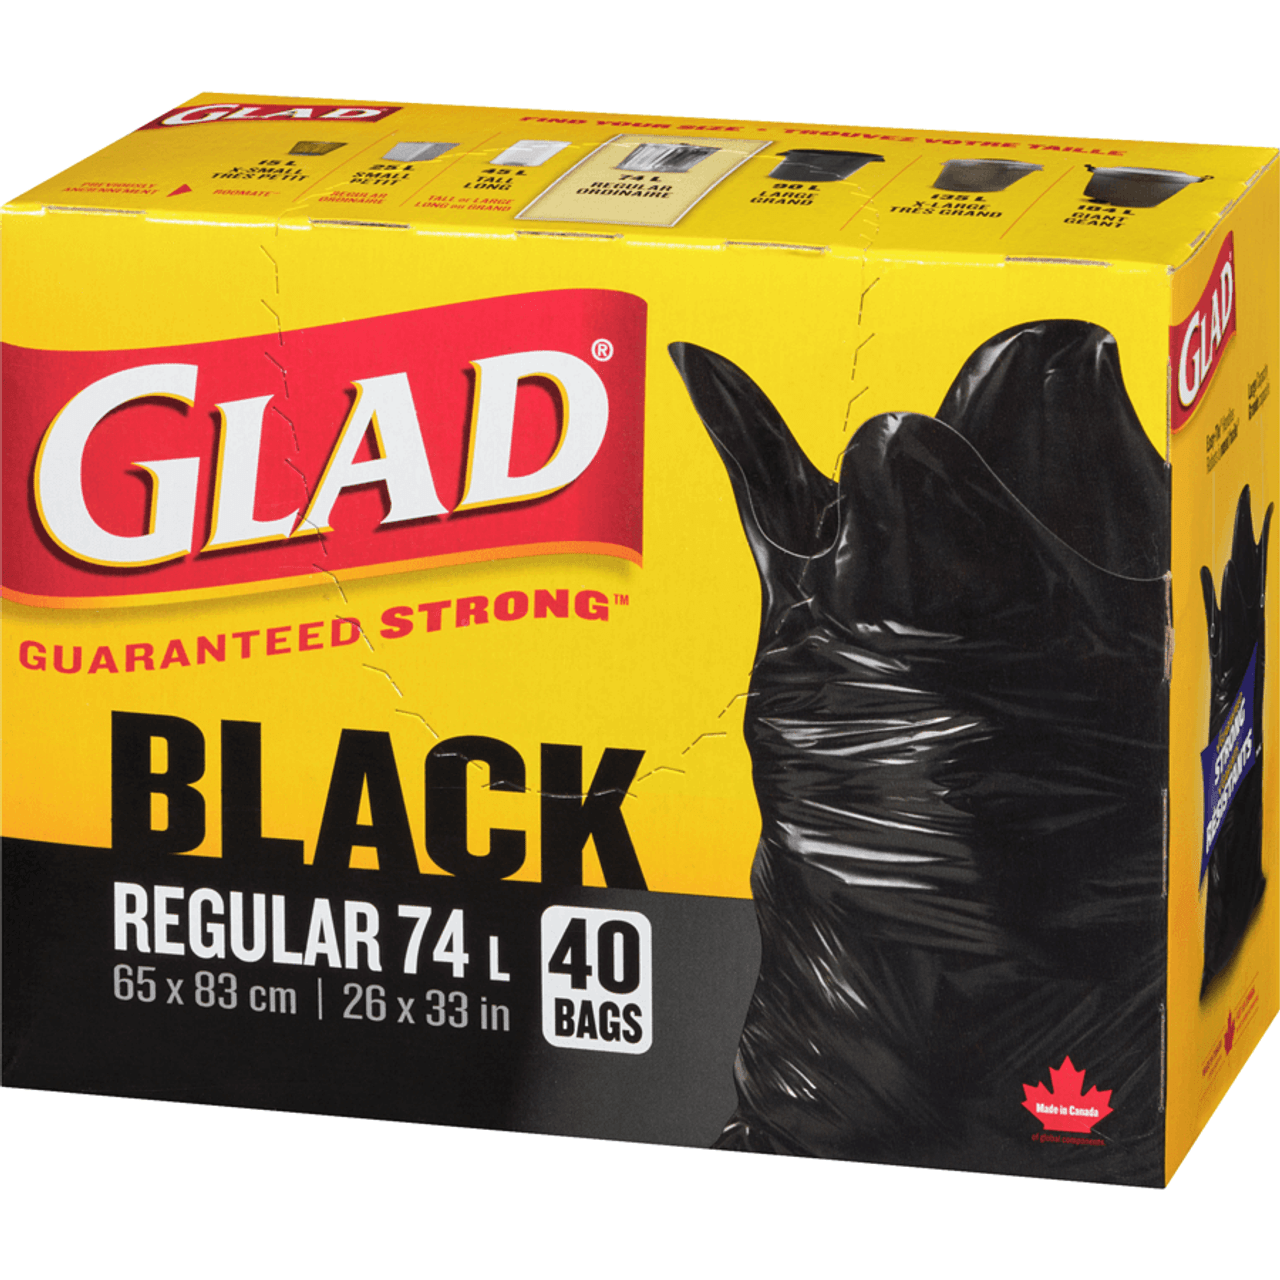 GLAD Black Garbage Bags - Regular 74 Litres, 40 Bags(8/Case)-Chicken Pieces